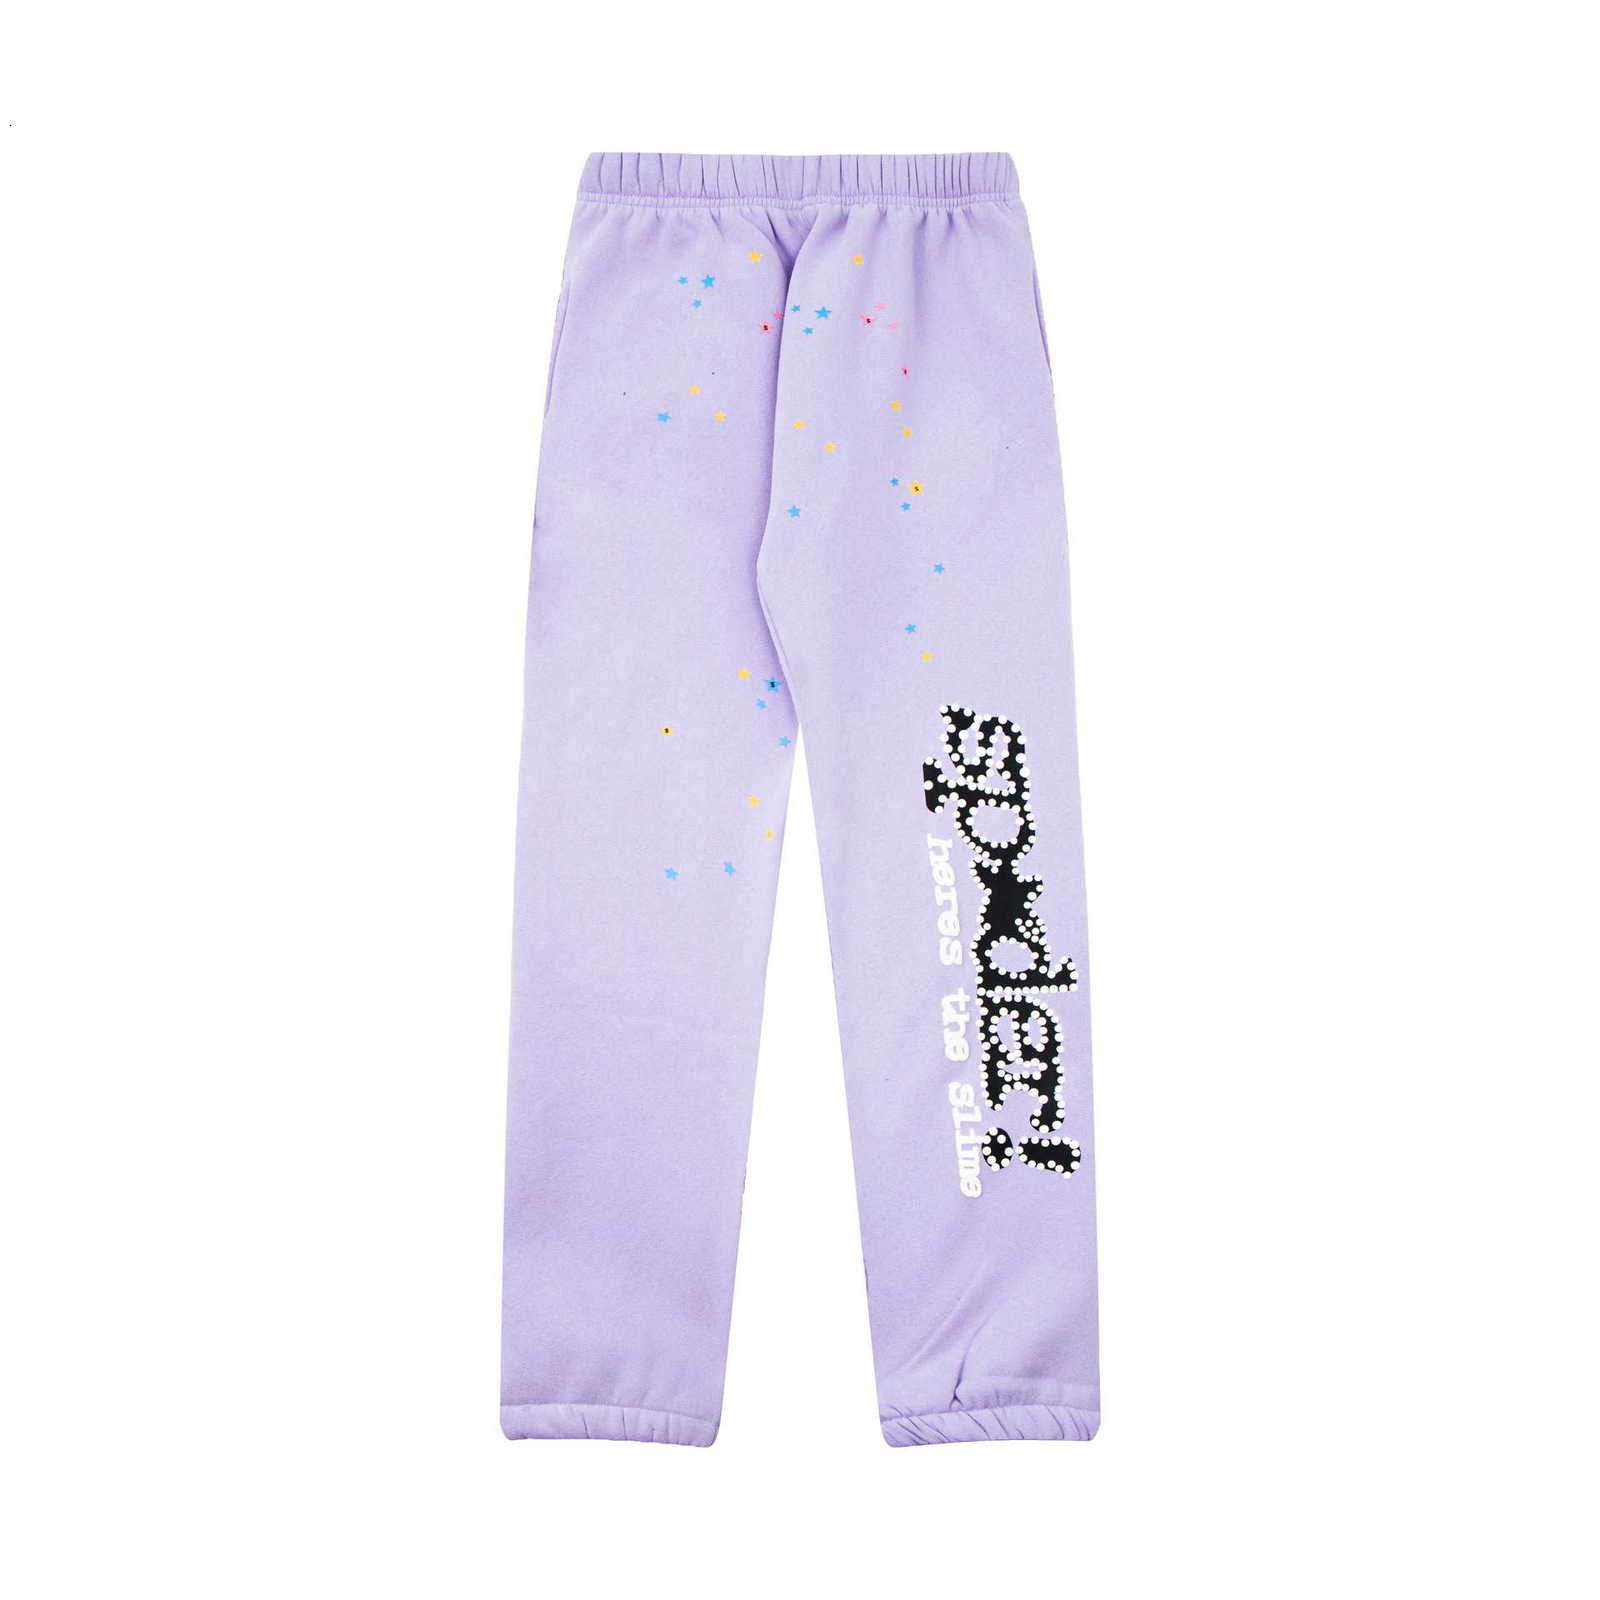 violet (pantalon sp06)